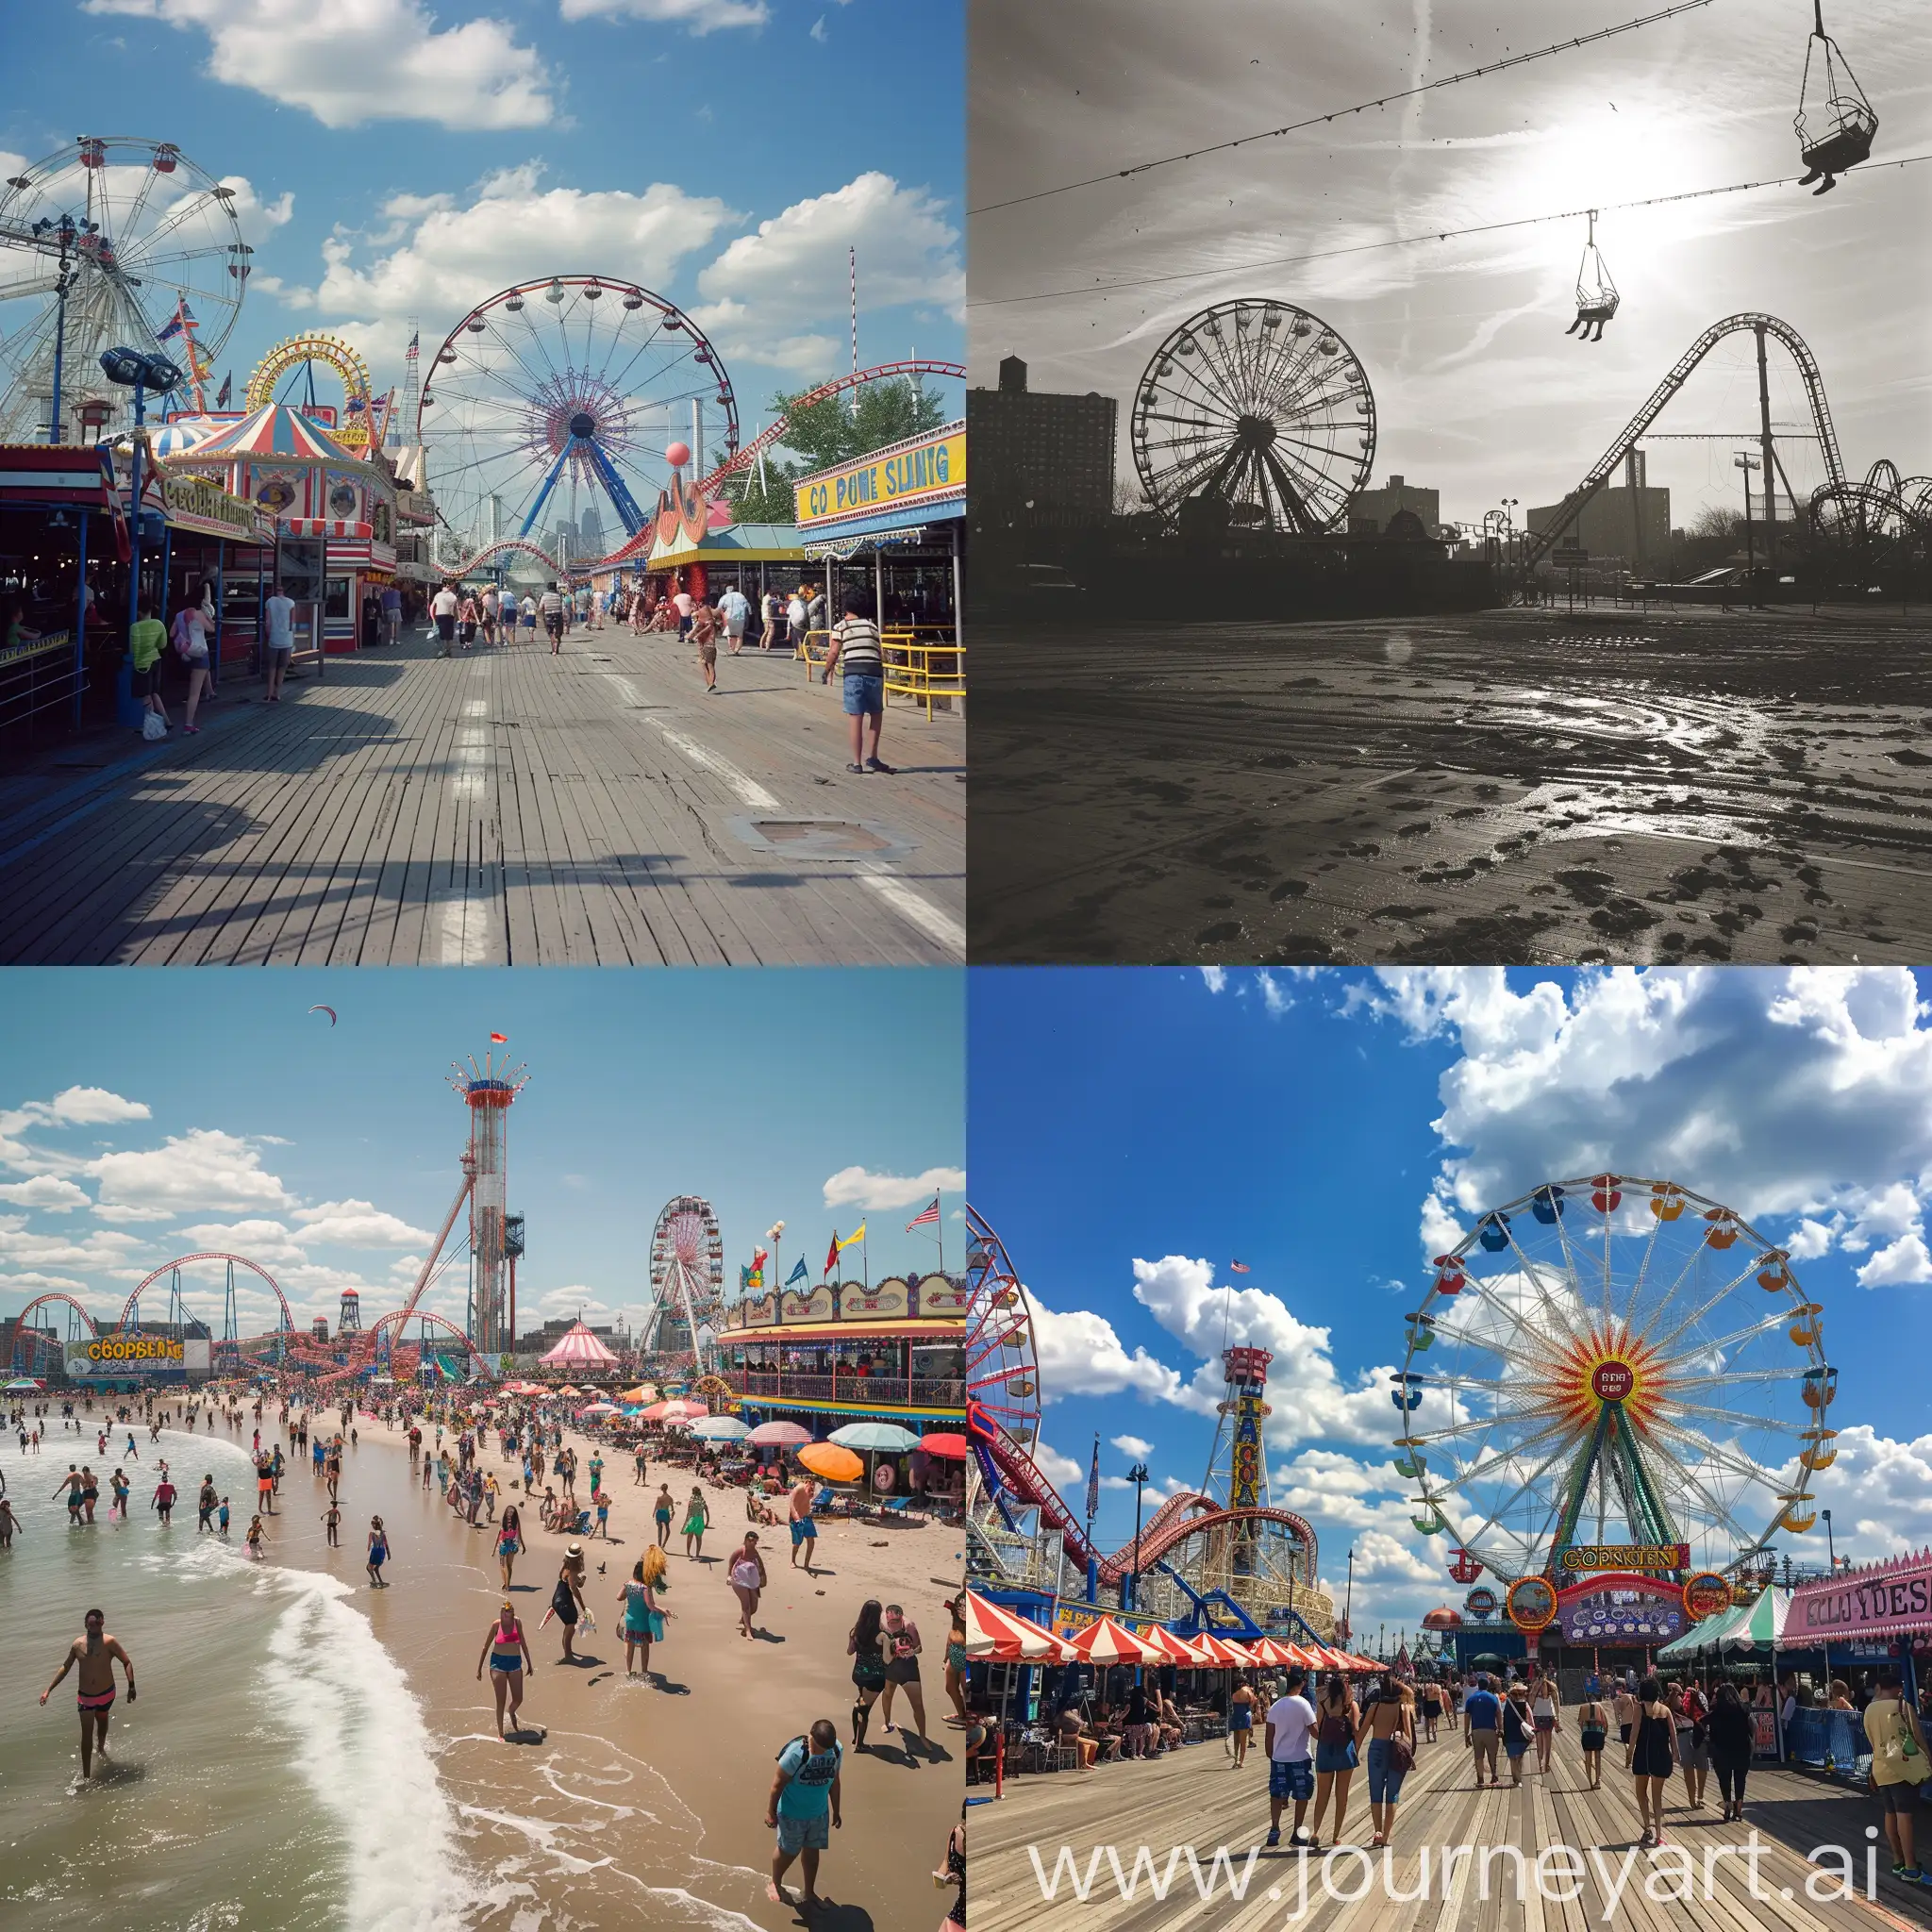 Vibrant-Scene-at-Coney-Island-Amusement-Park